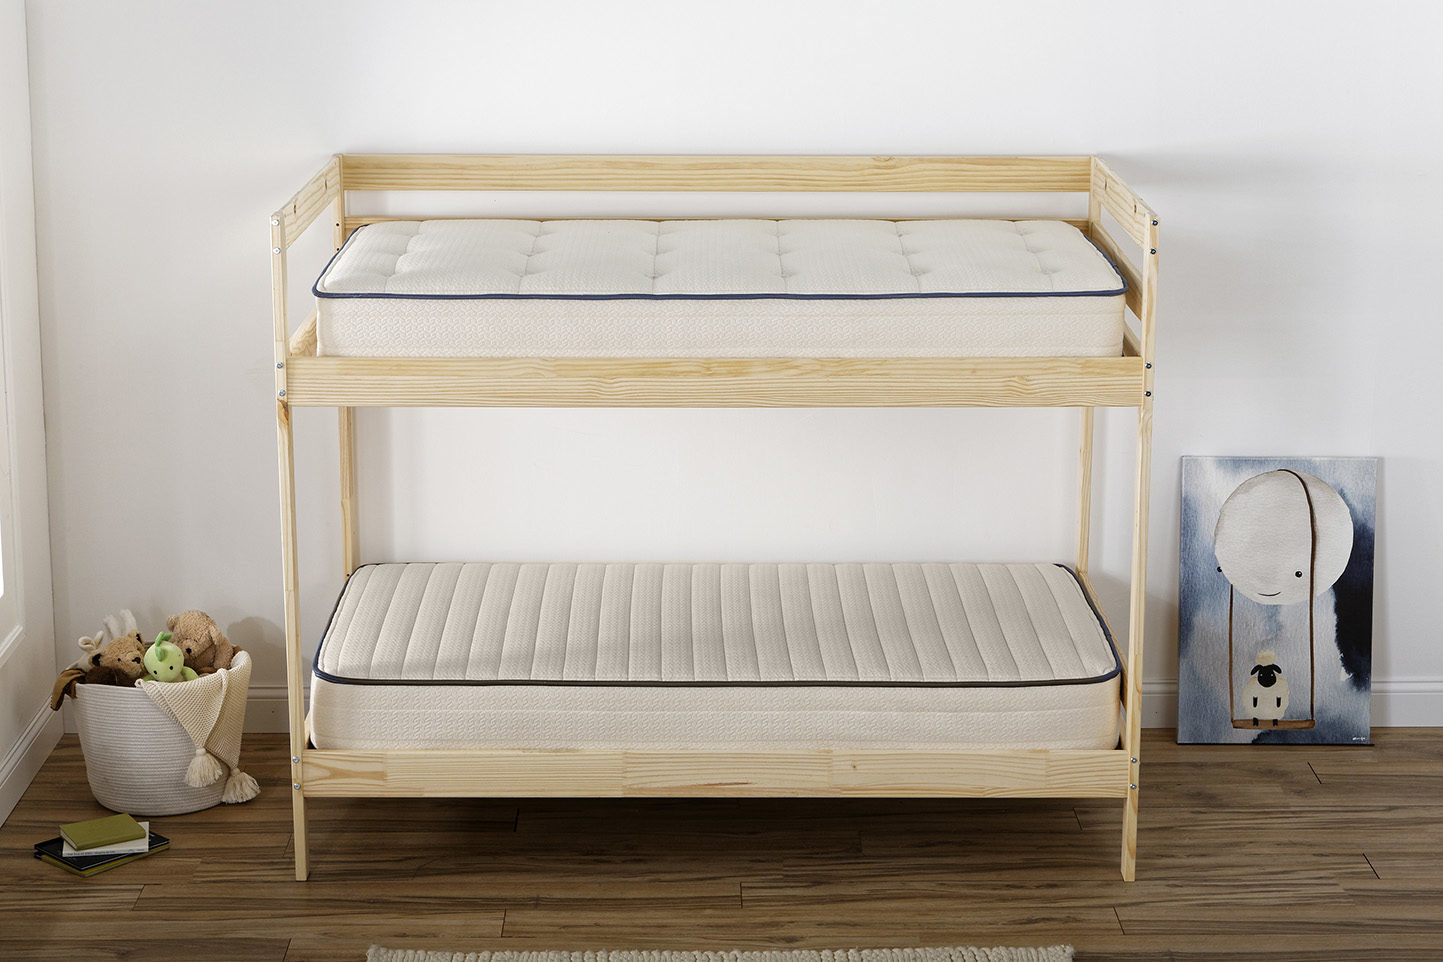 Kiwi Bunk Bed Mattresses, Can You Use A Regular Mattress On A Bunk Bed